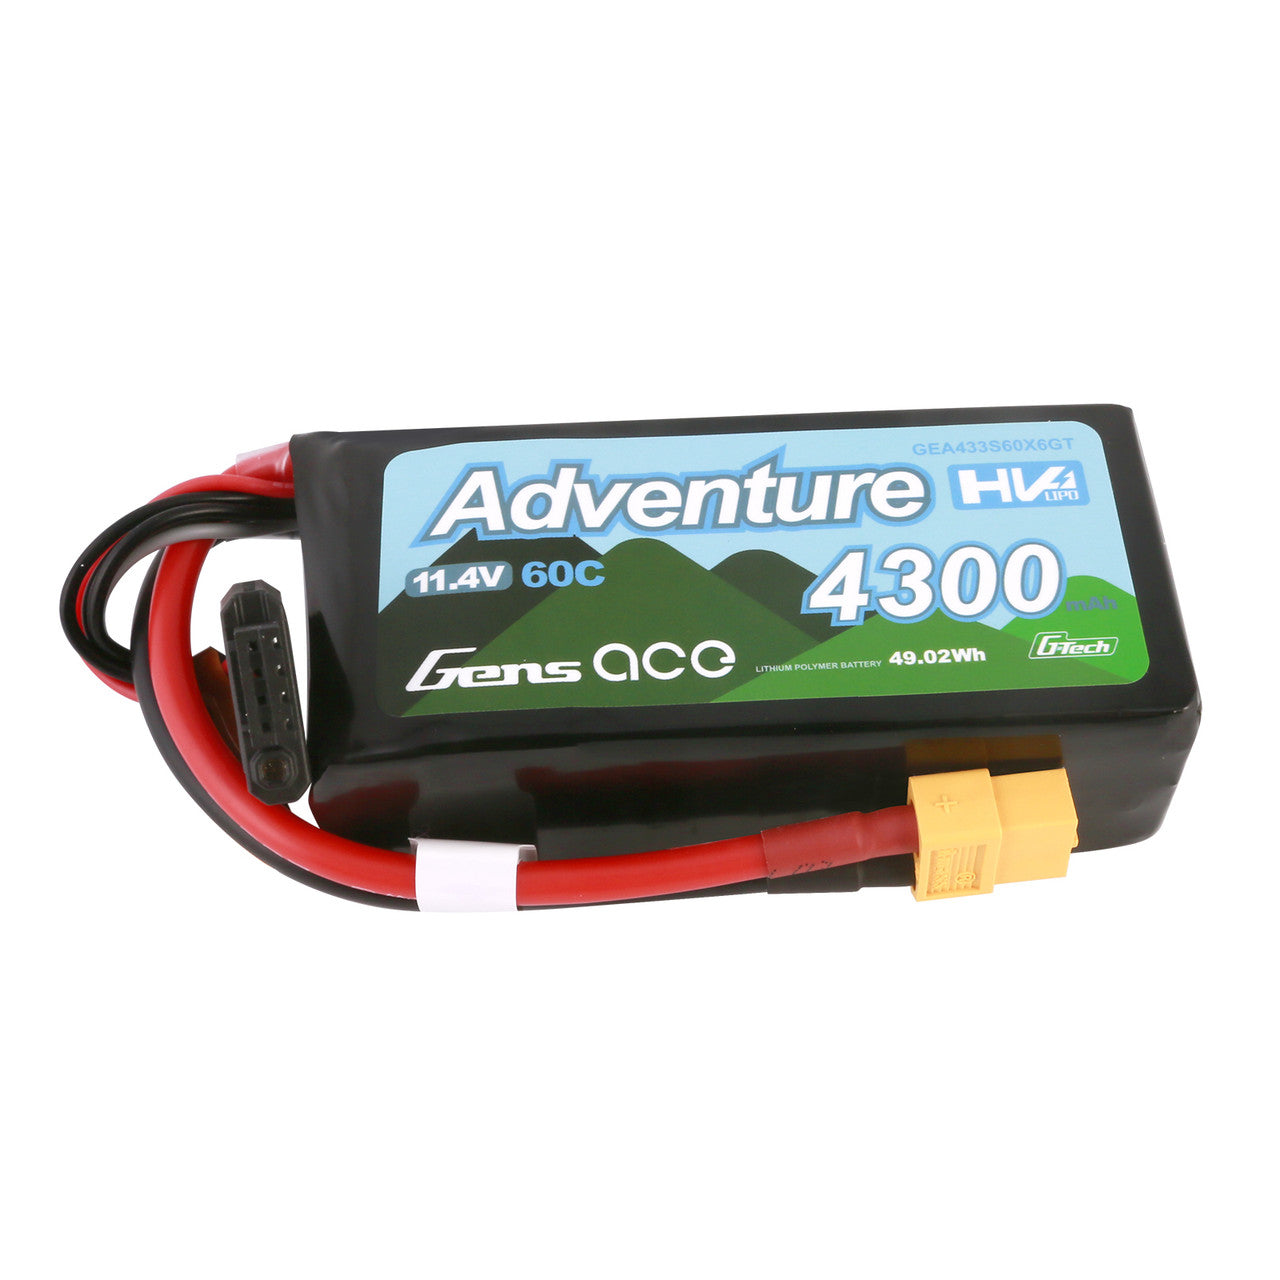 GEA433S60X6GT Gens Ace Adventure High Voltage 4300mAh 3S1P 11.4V 60C G-TechLipo Battery With XT60 Plug